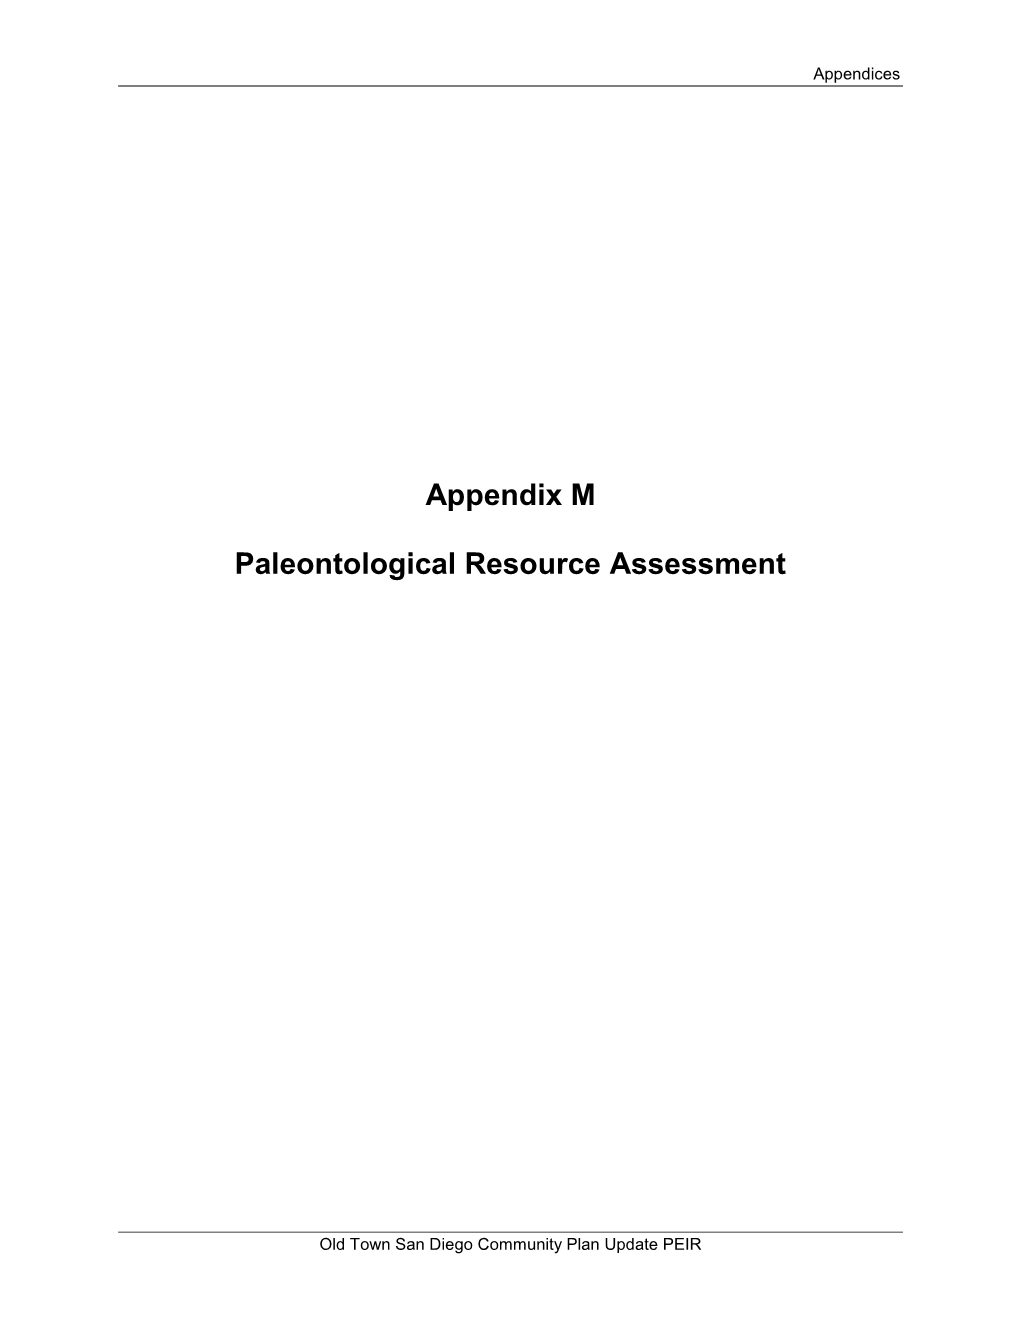 Appendix M Paleontological Resource Assessment